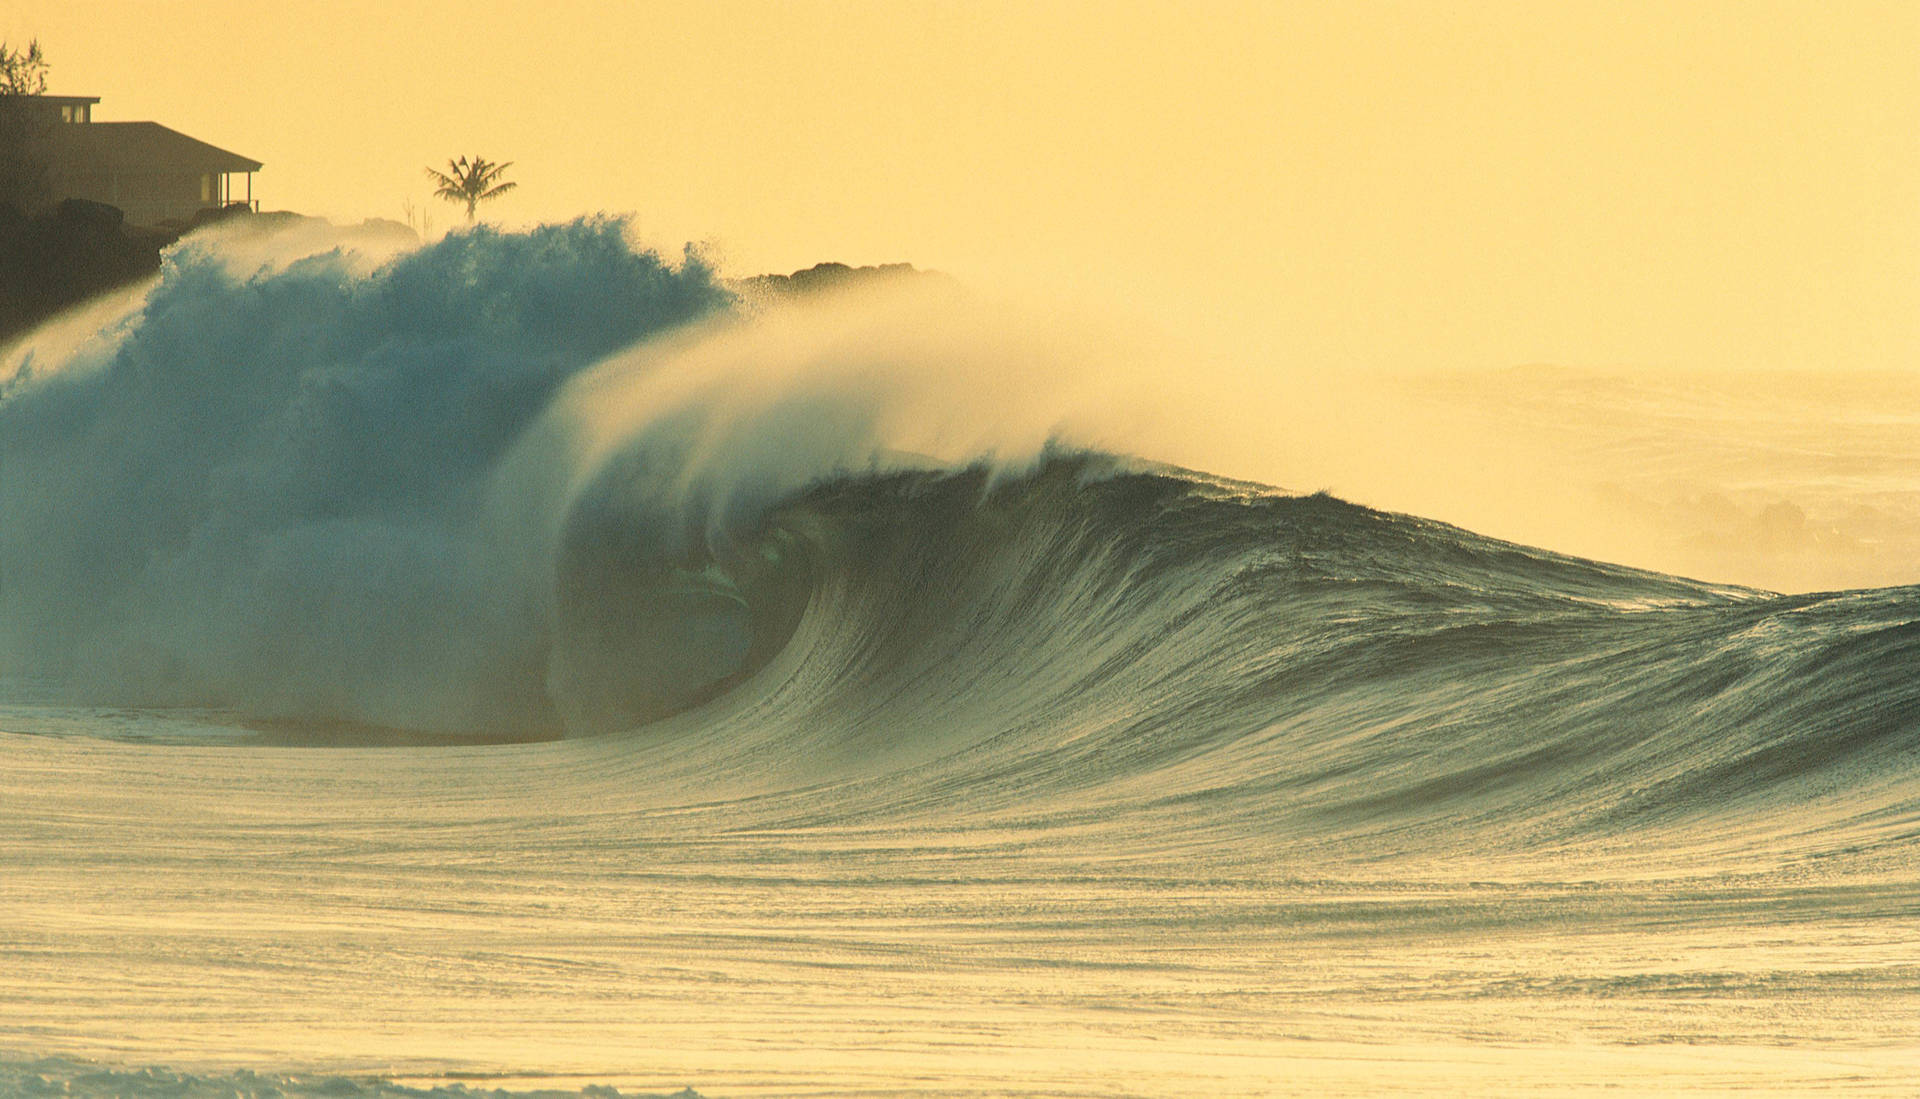 Feel the power of an immortal ocean wave Wallpaper